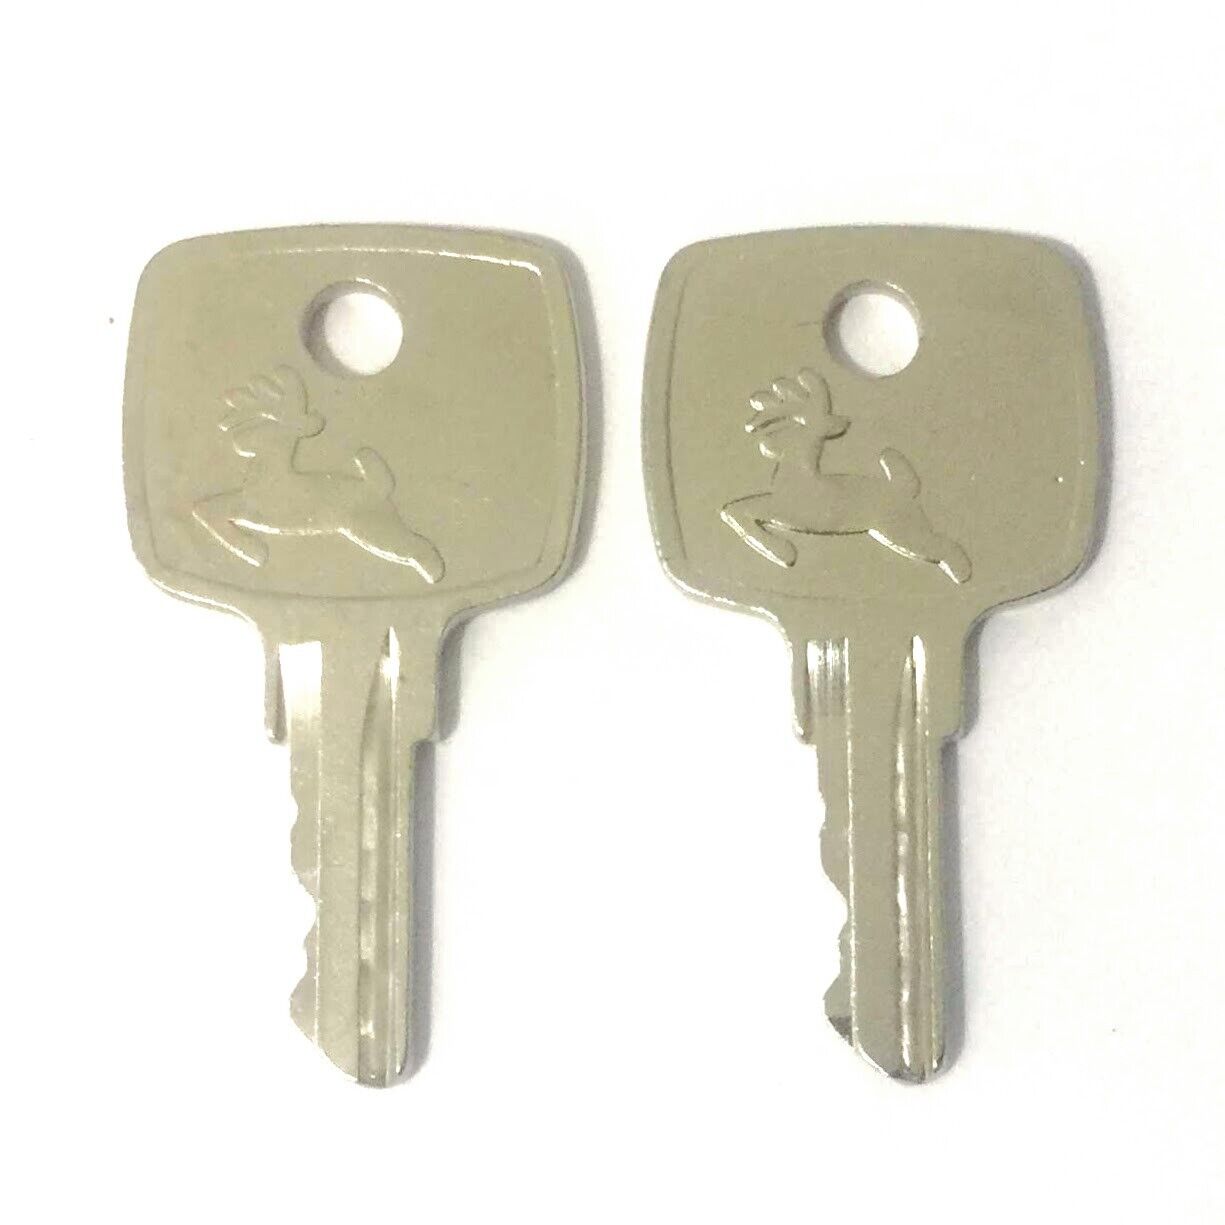 2 John Deere AR51481 Ignition Keys - Fast Free Shipping! JOHN DEERE AR51481 - фотография #2